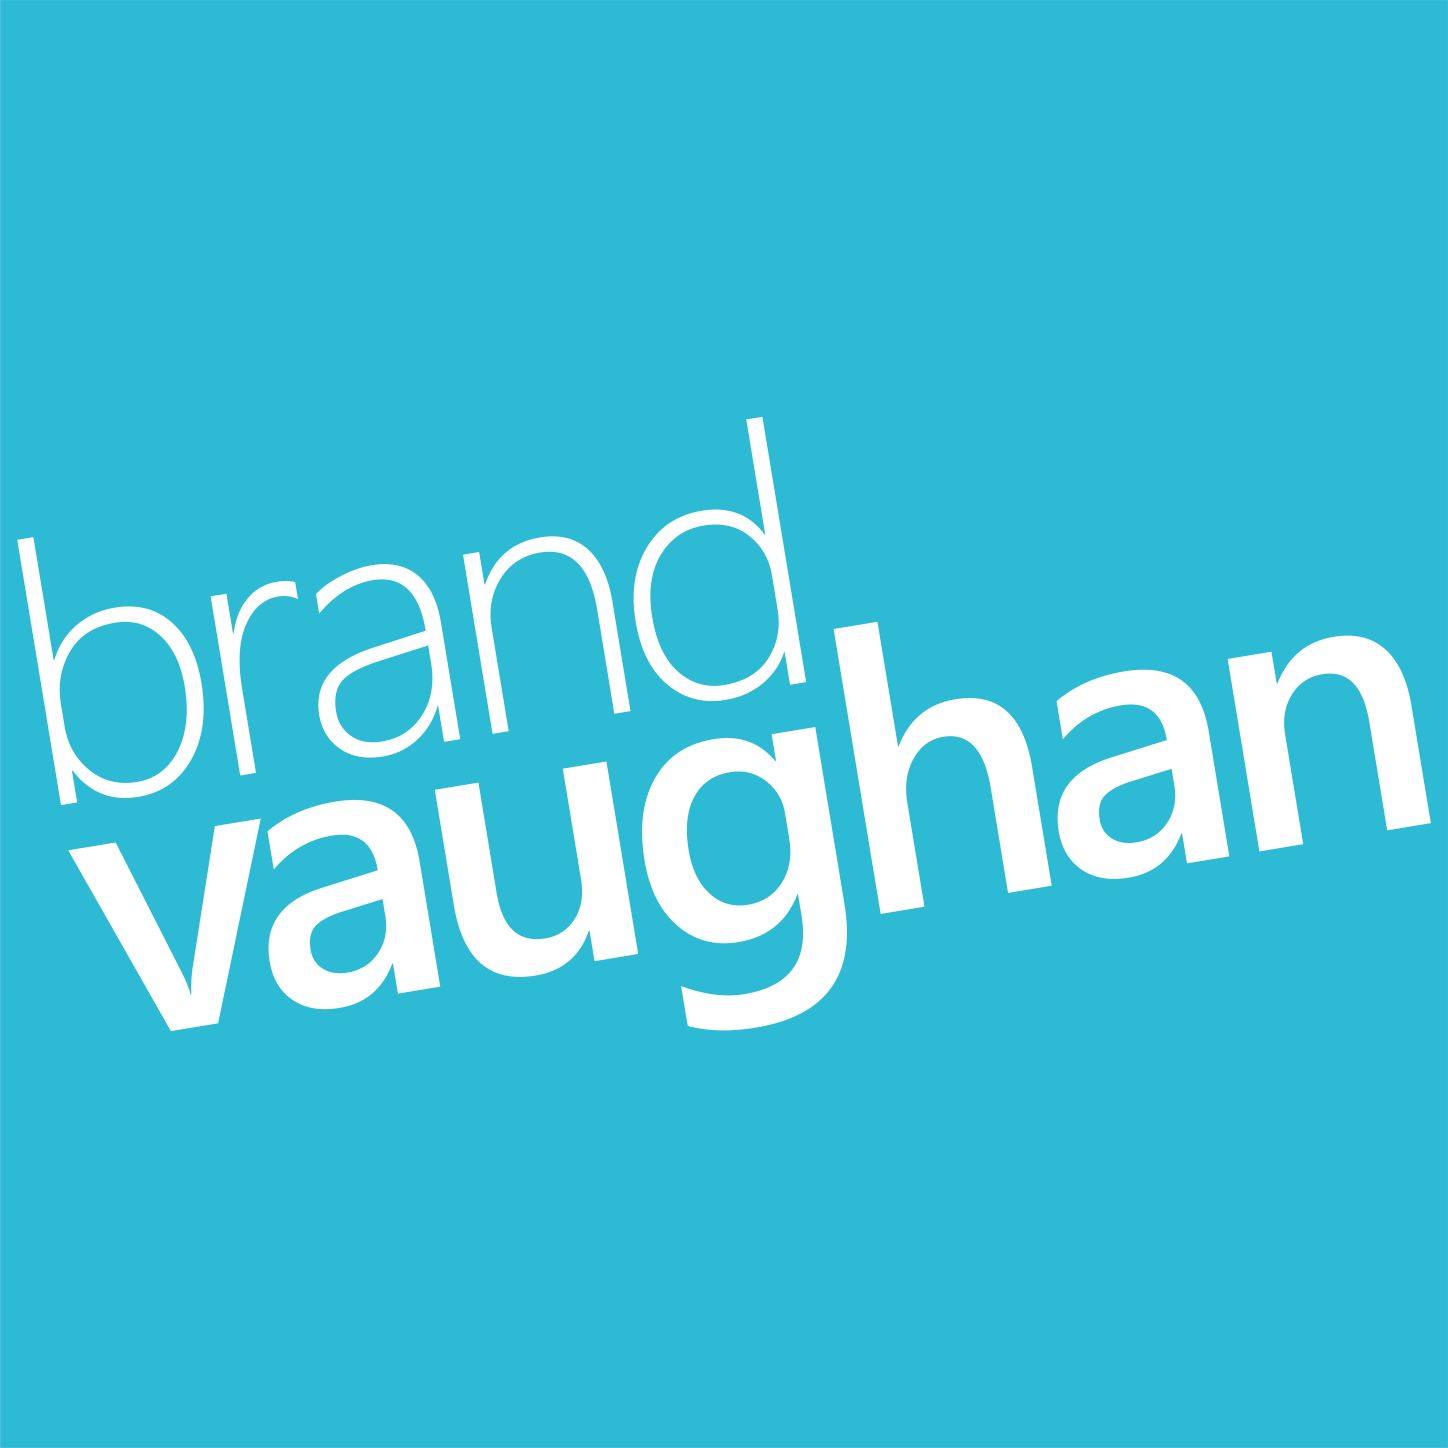 Brand Vaughan